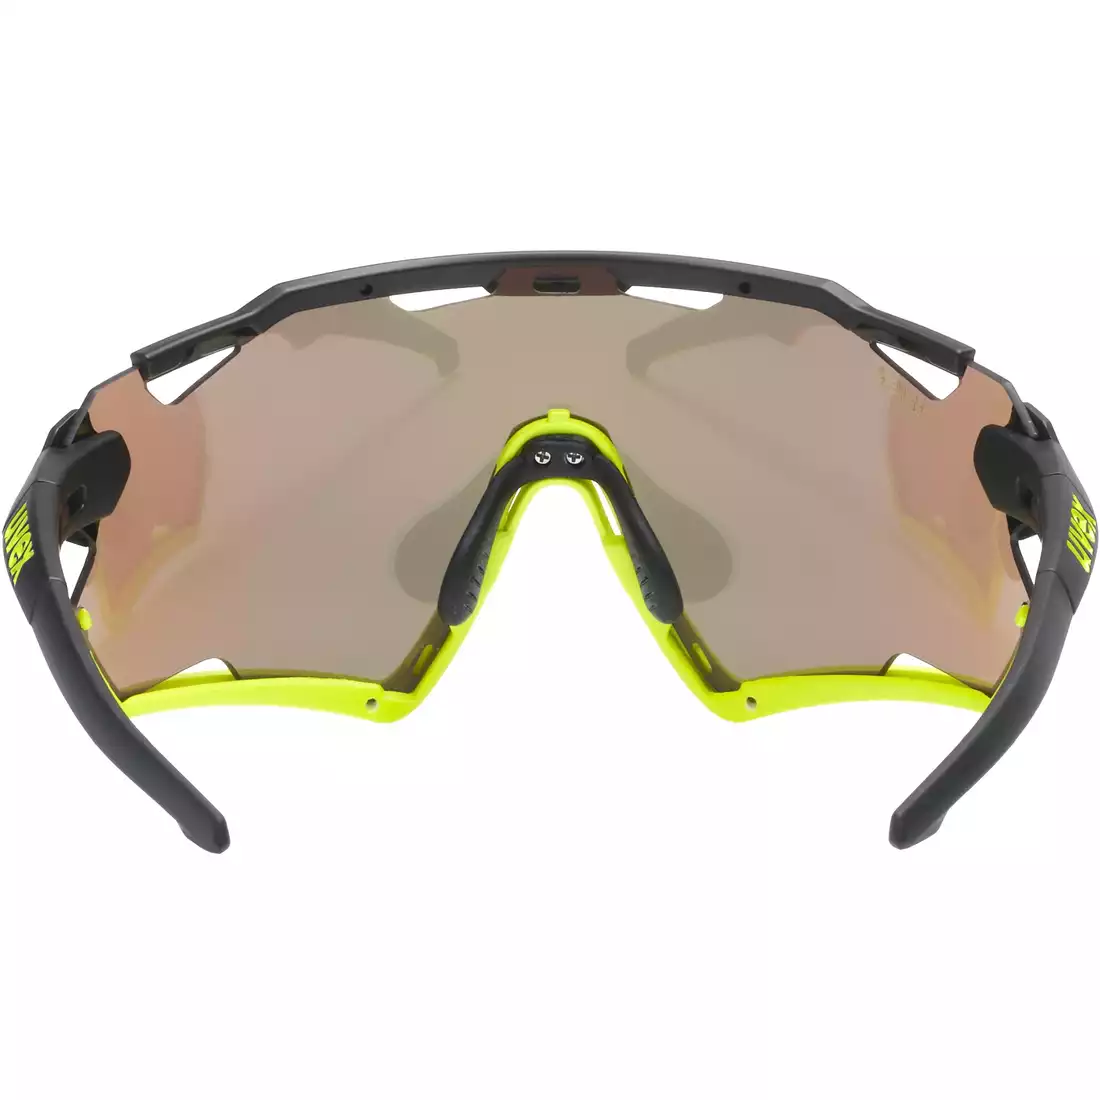 UVEX ochelari de protecție pentru sport Sportstyle 228 mirror yellow (S3), negru-fluor